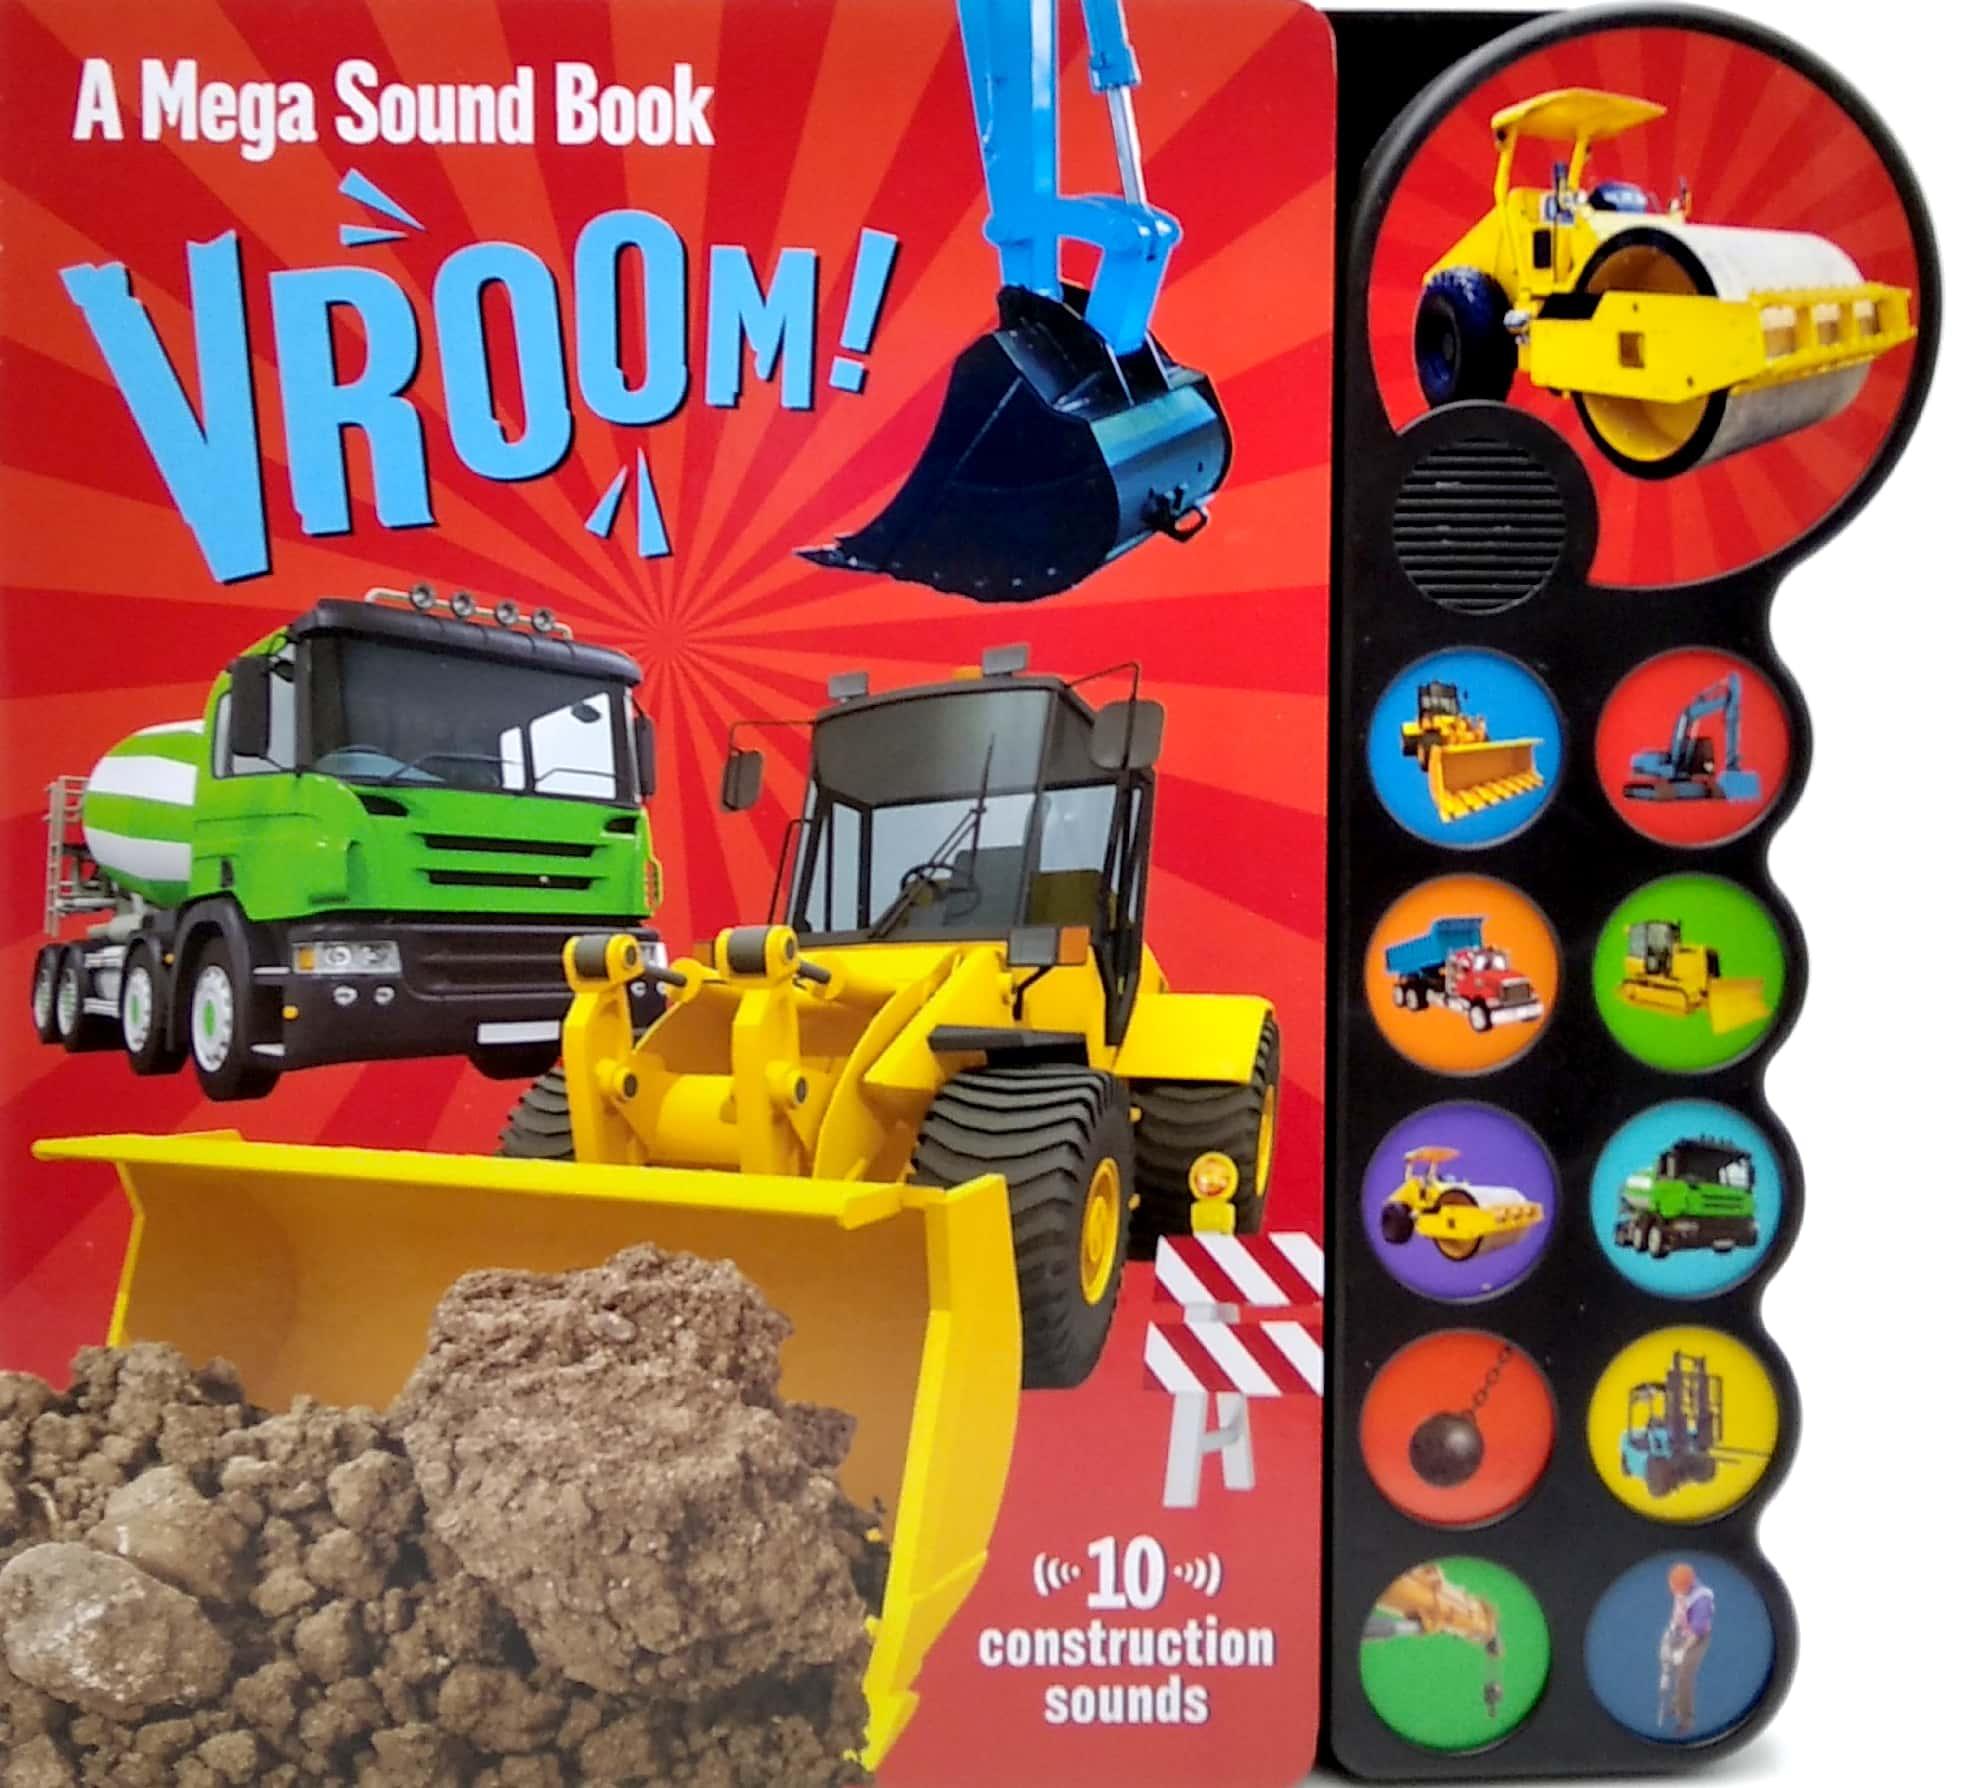 A Mega Sound Book: Vroom 10-Button Sound Book